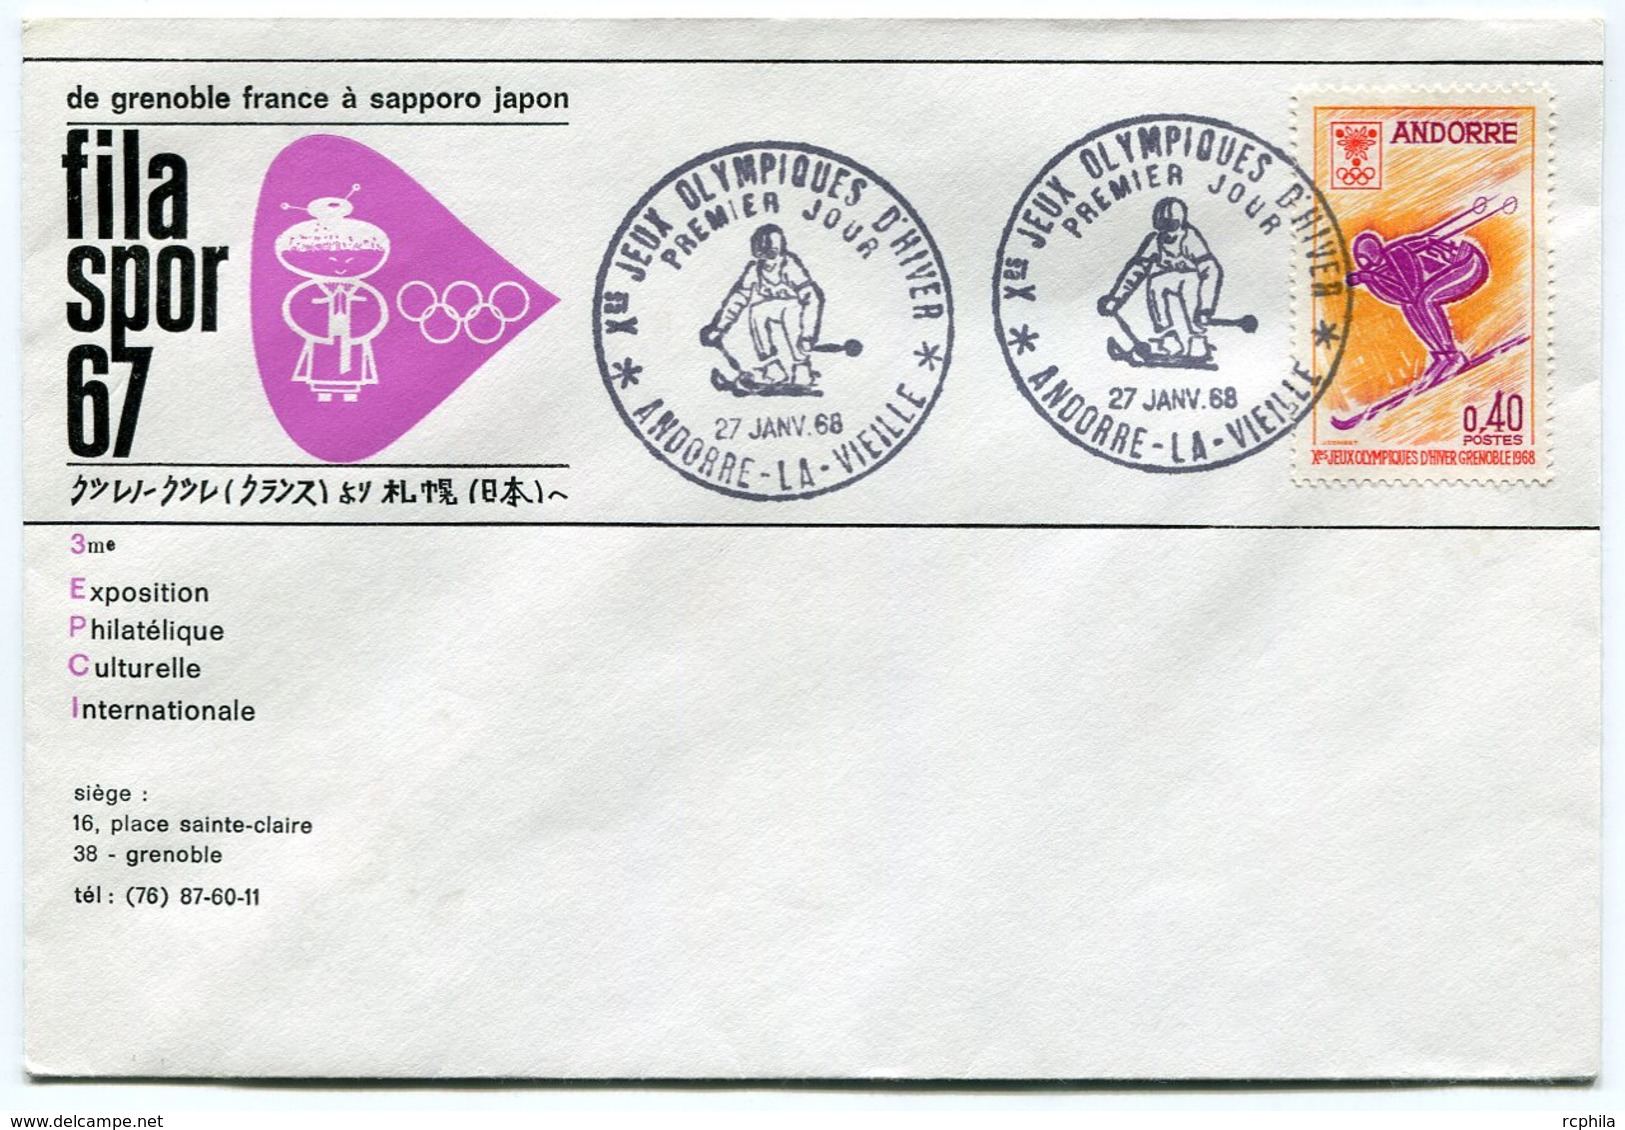 RC 10478 ANDORRE JEUX OLYMPIQUES DE GRENOBLE 1968 SKI ENVELOPPE FRANCE JAPON 1er JOUR FDC TB - Storia Postale